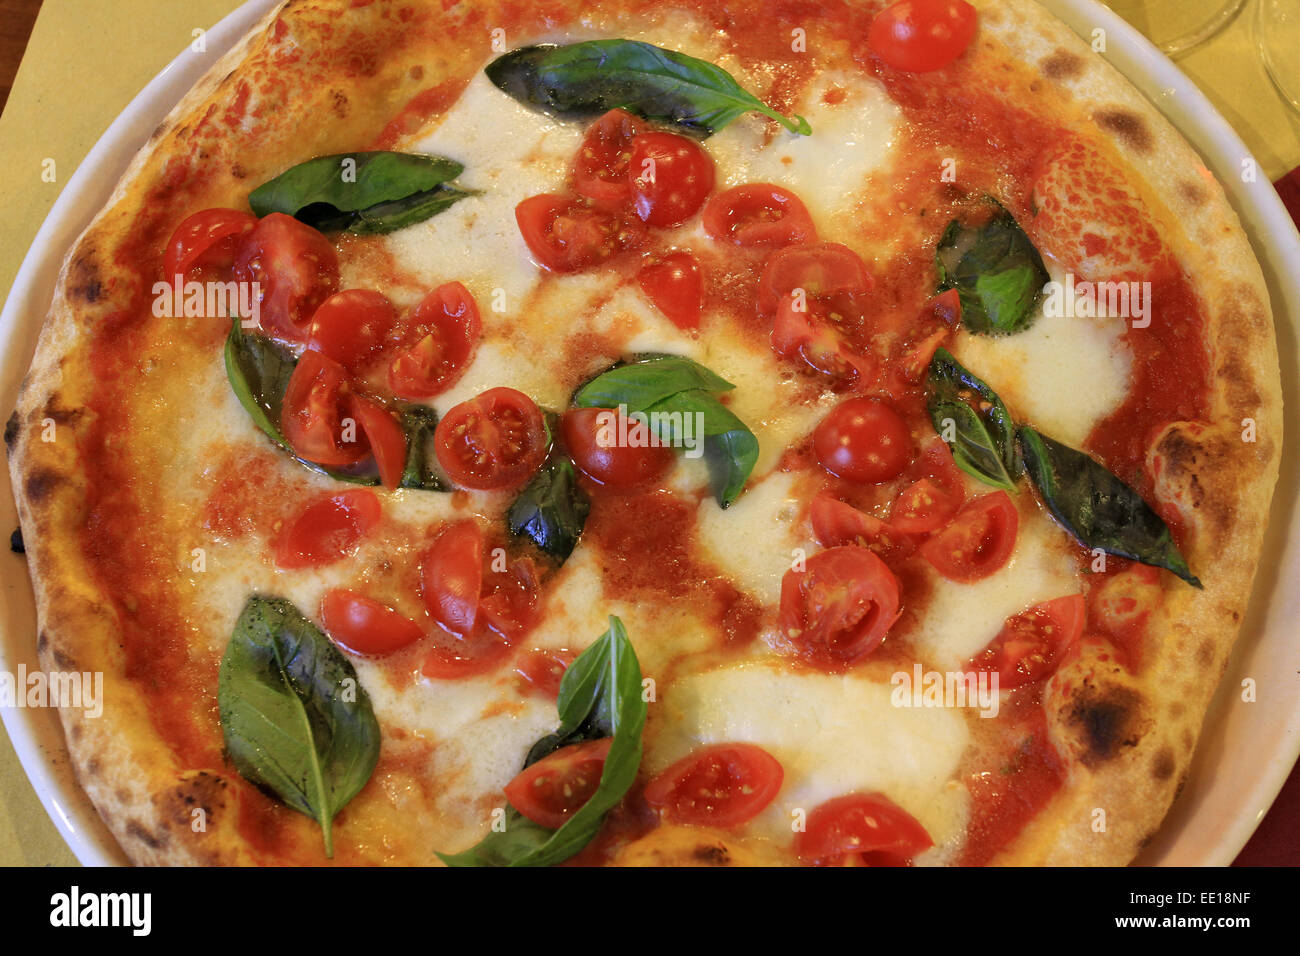 Italienische Spezialität, Pizza mit Tomaten Mozzarella und Basilikum, Italian specialty, pizza with tomatoes, mozzarella and bas Stock Photo